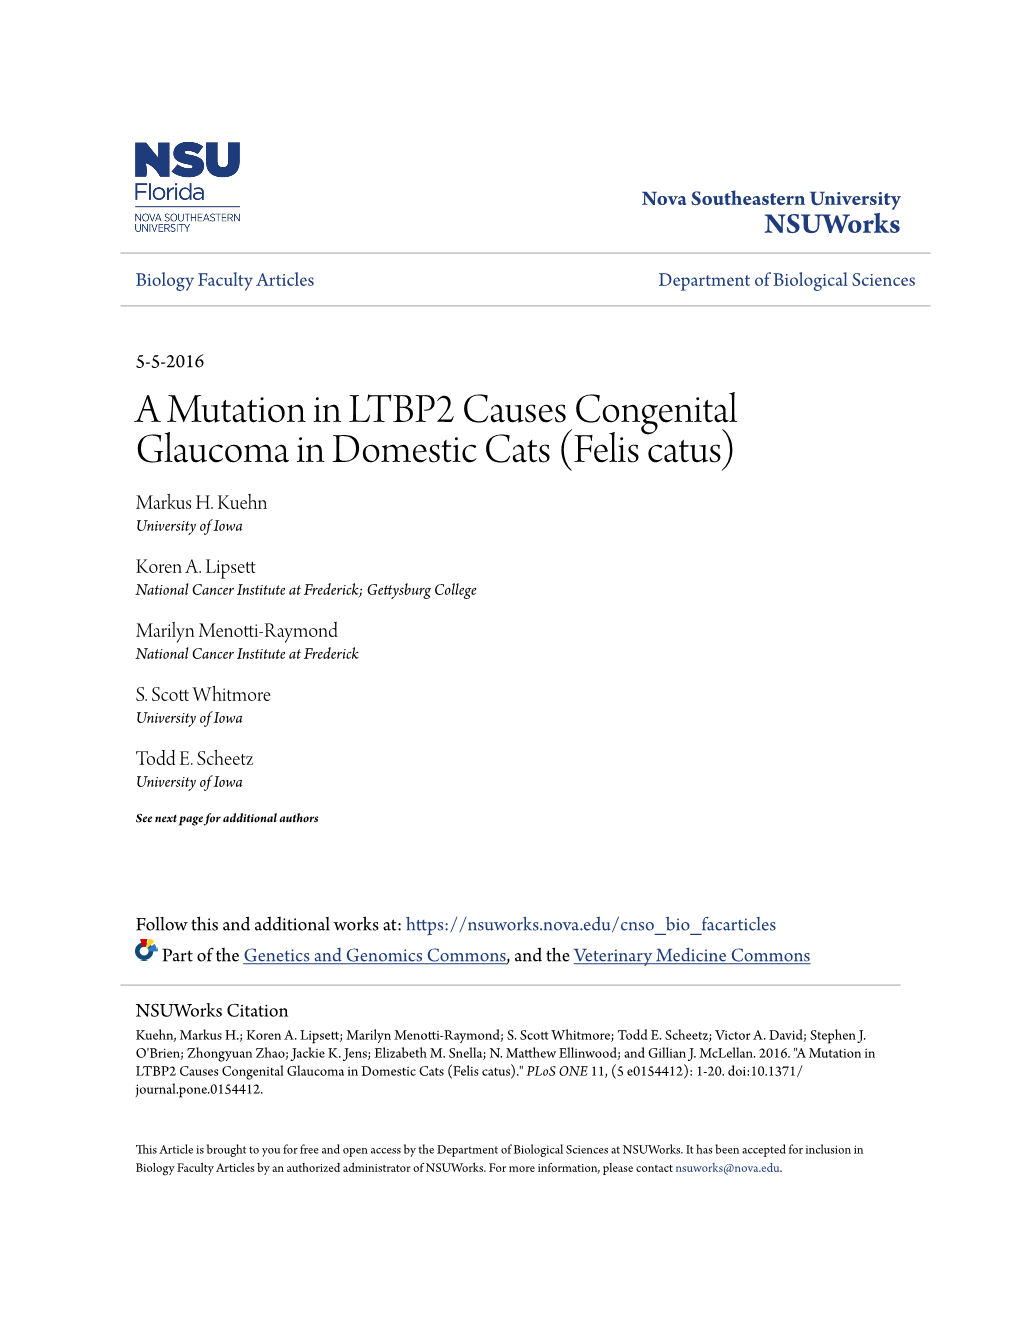 A Mutation in LTBP2 Causes Congenital Glaucoma in Domestic Cats (Felis Catus) Markus H